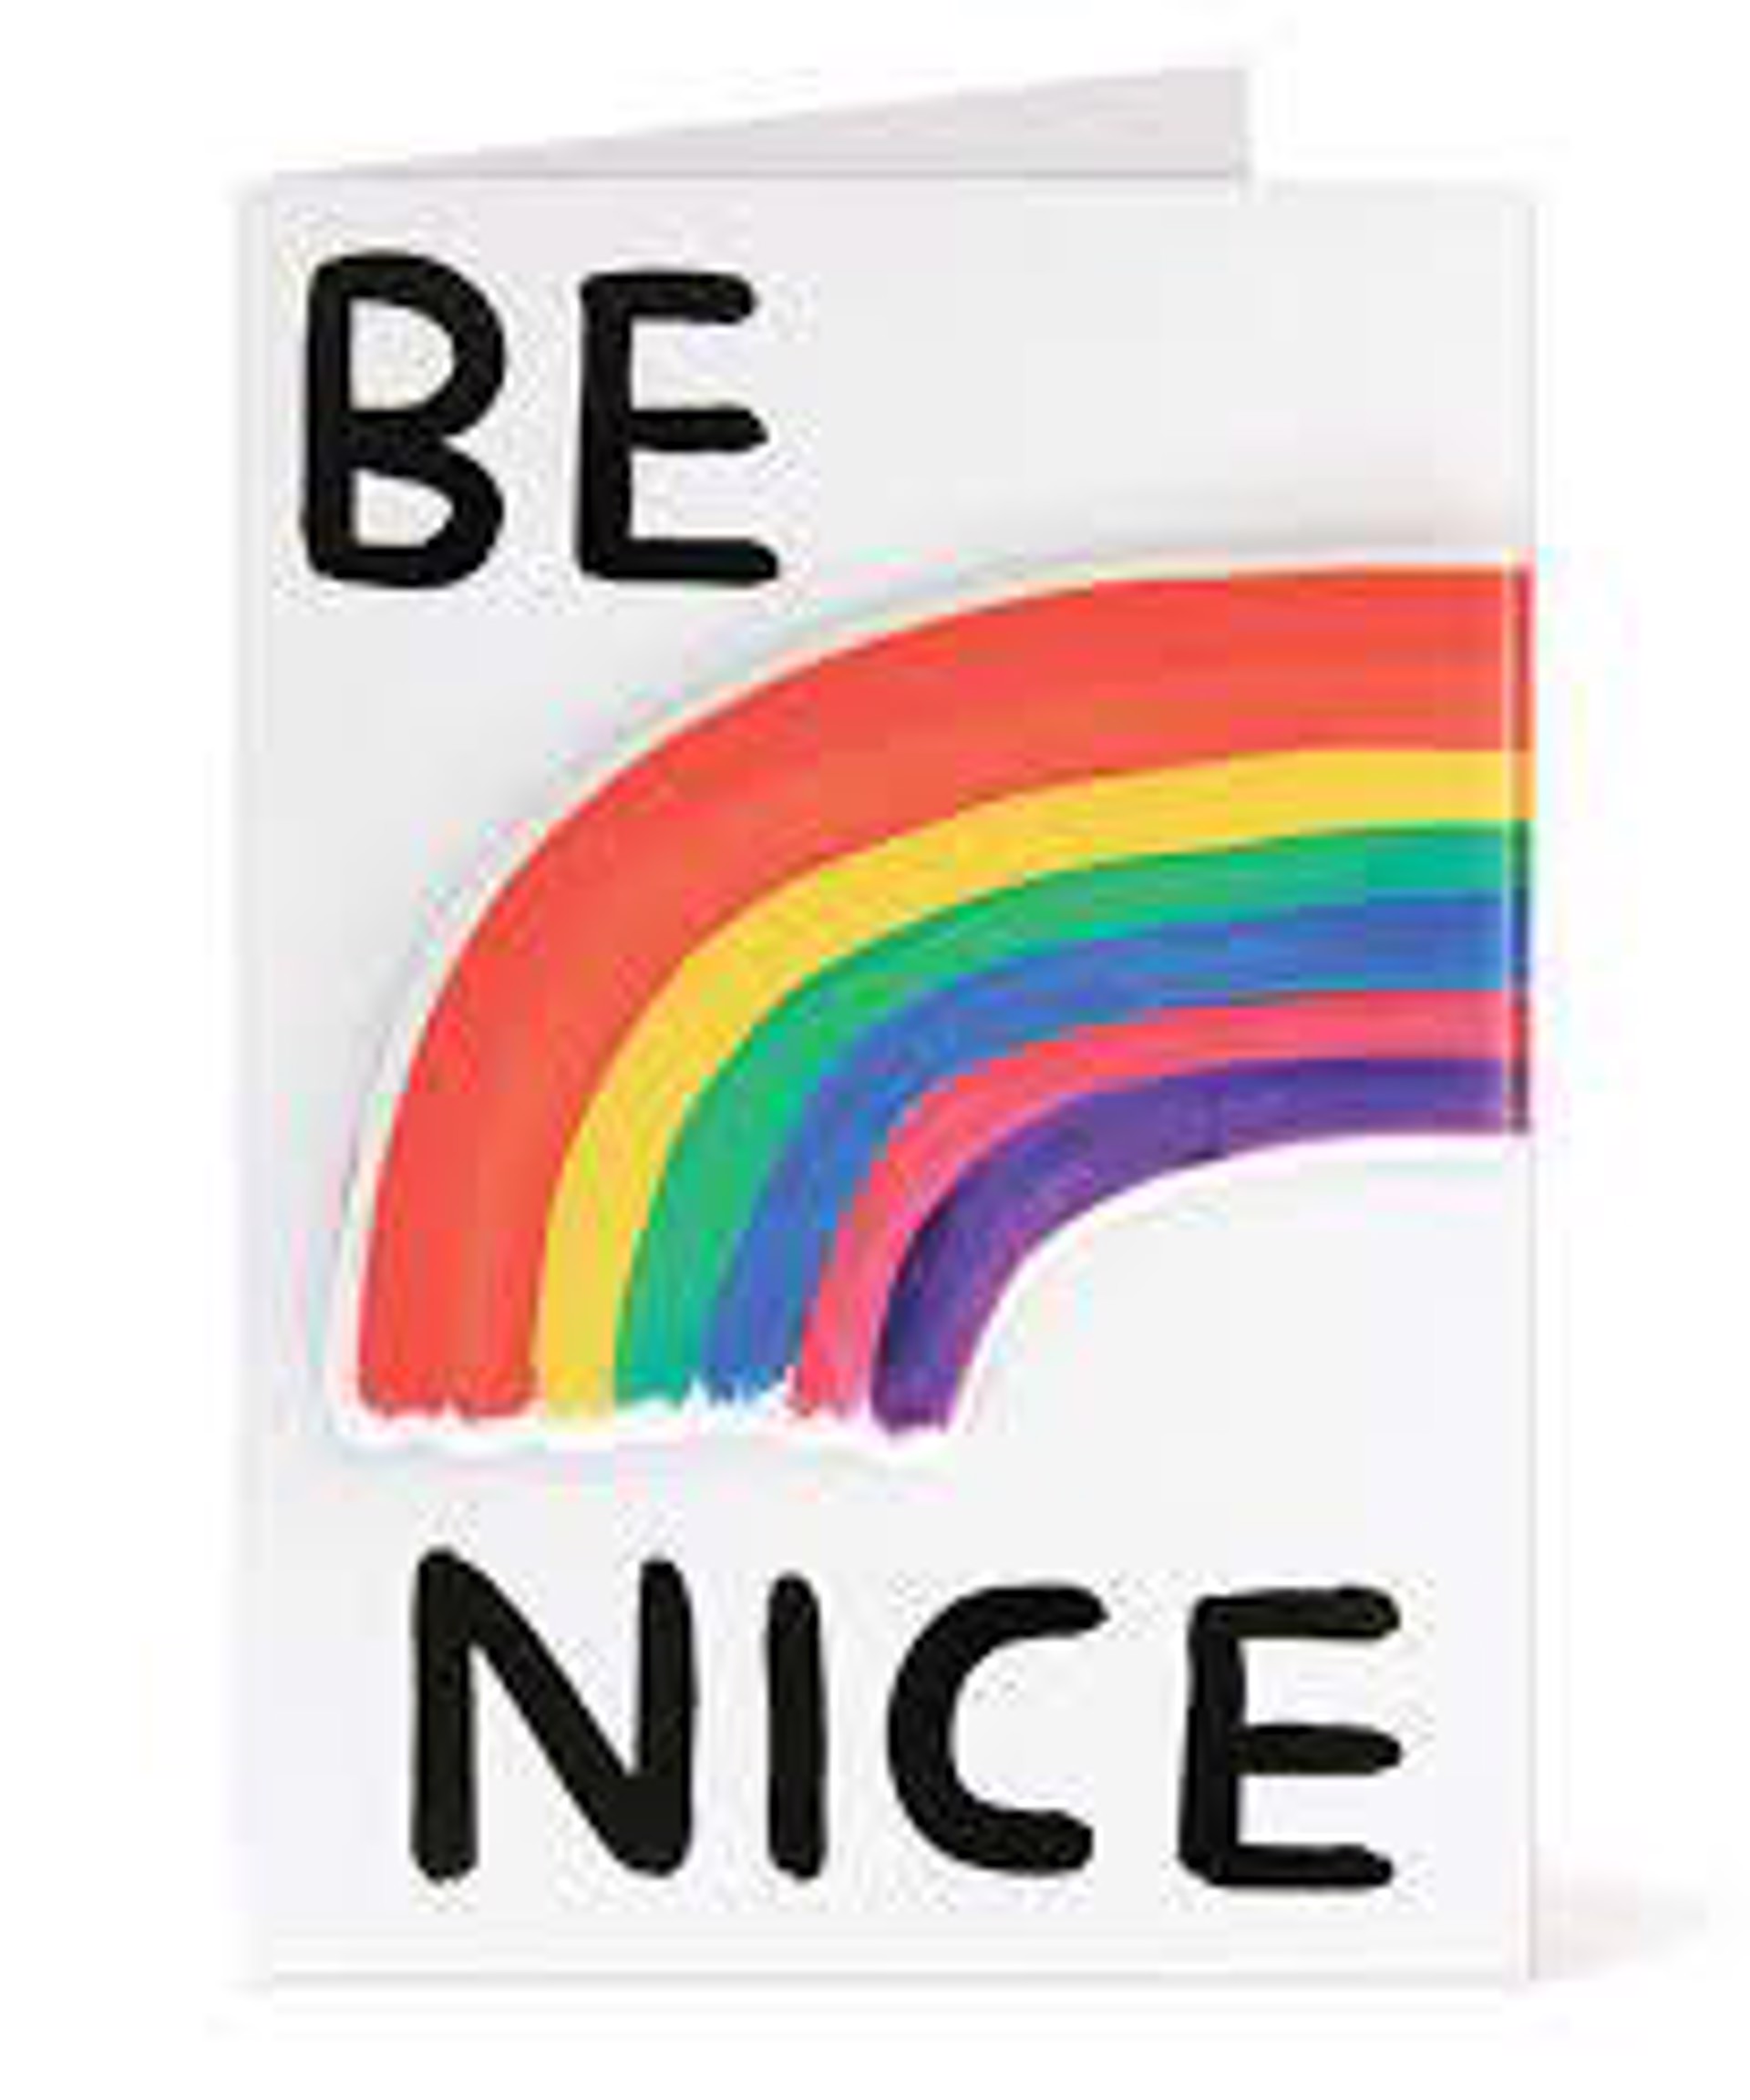 Be Nice Puffy Sticker Card by David Shrigley